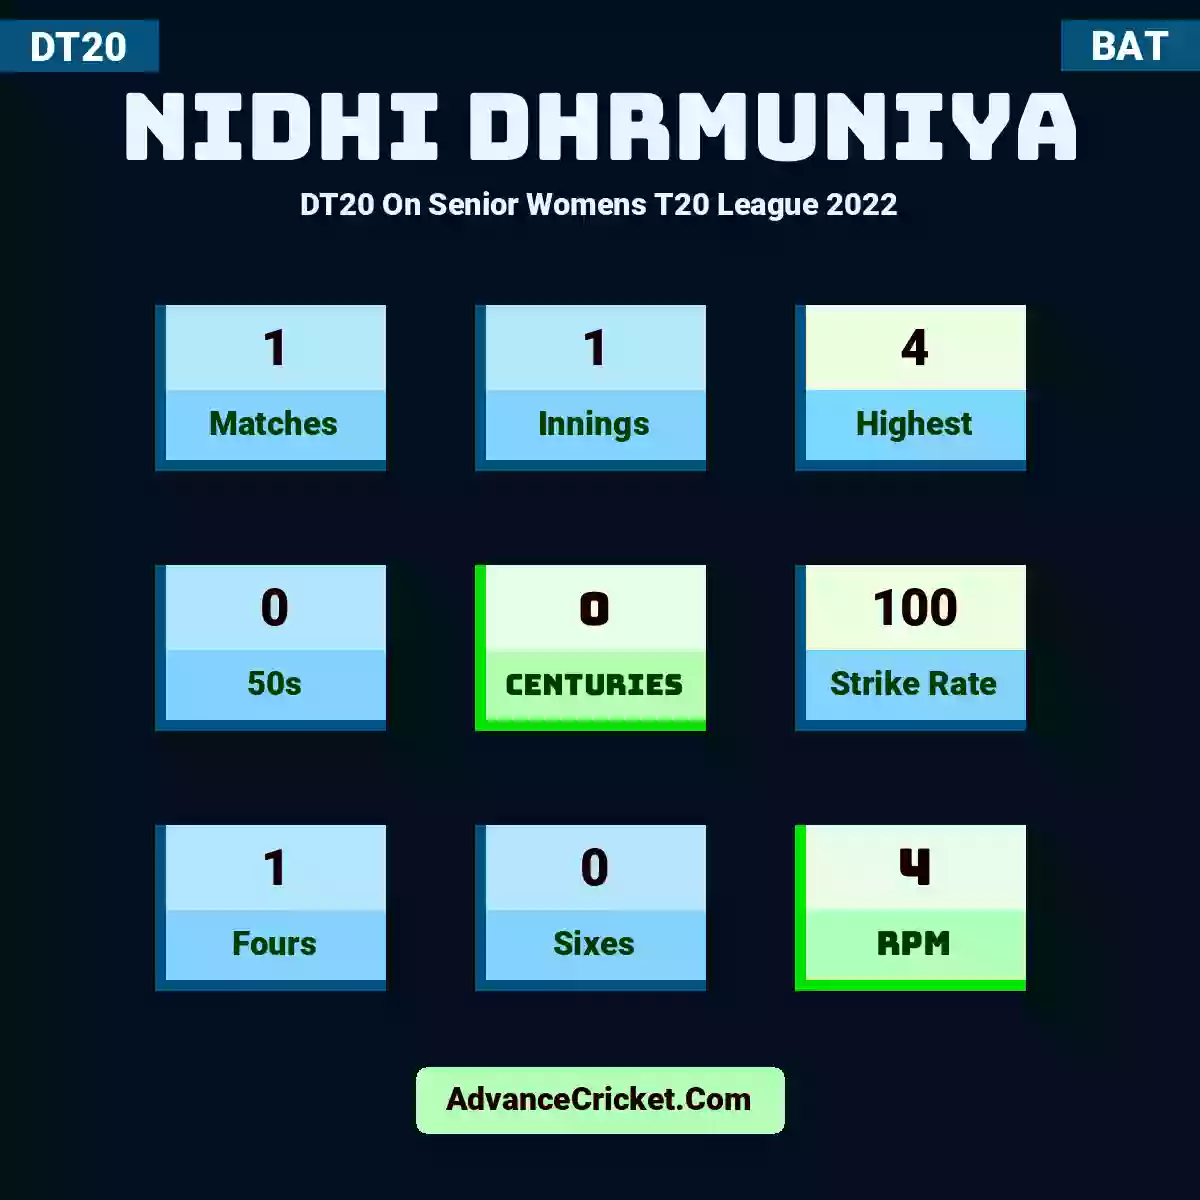 Nidhi Dhrmuniya DT20  On Senior Womens T20 League 2022, Nidhi Dhrmuniya played 1 matches, scored 4 runs as highest, 0 half-centuries, and 0 centuries, with a strike rate of 100. N.Dhrmuniya hit 1 fours and 0 sixes, with an RPM of 4.